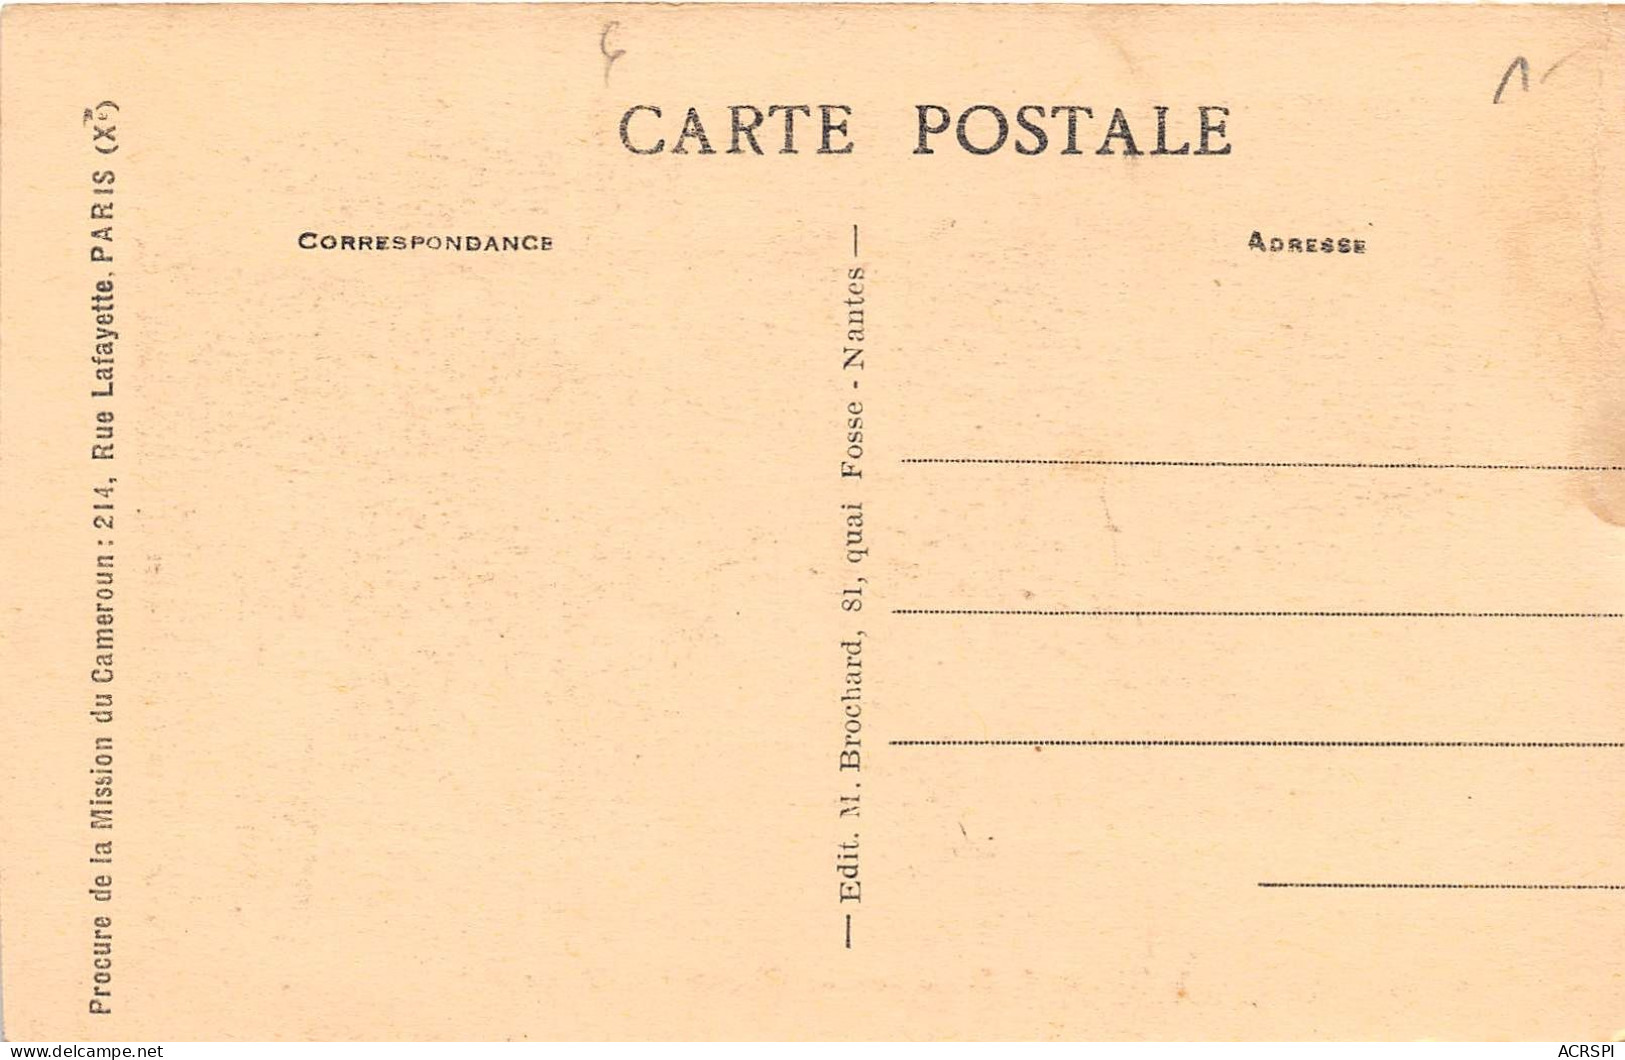 CAMEROUN Kamerun Foumban La  Chapelle Et L'ecole  (scan Recto-verso) OO 0947 - Camerun